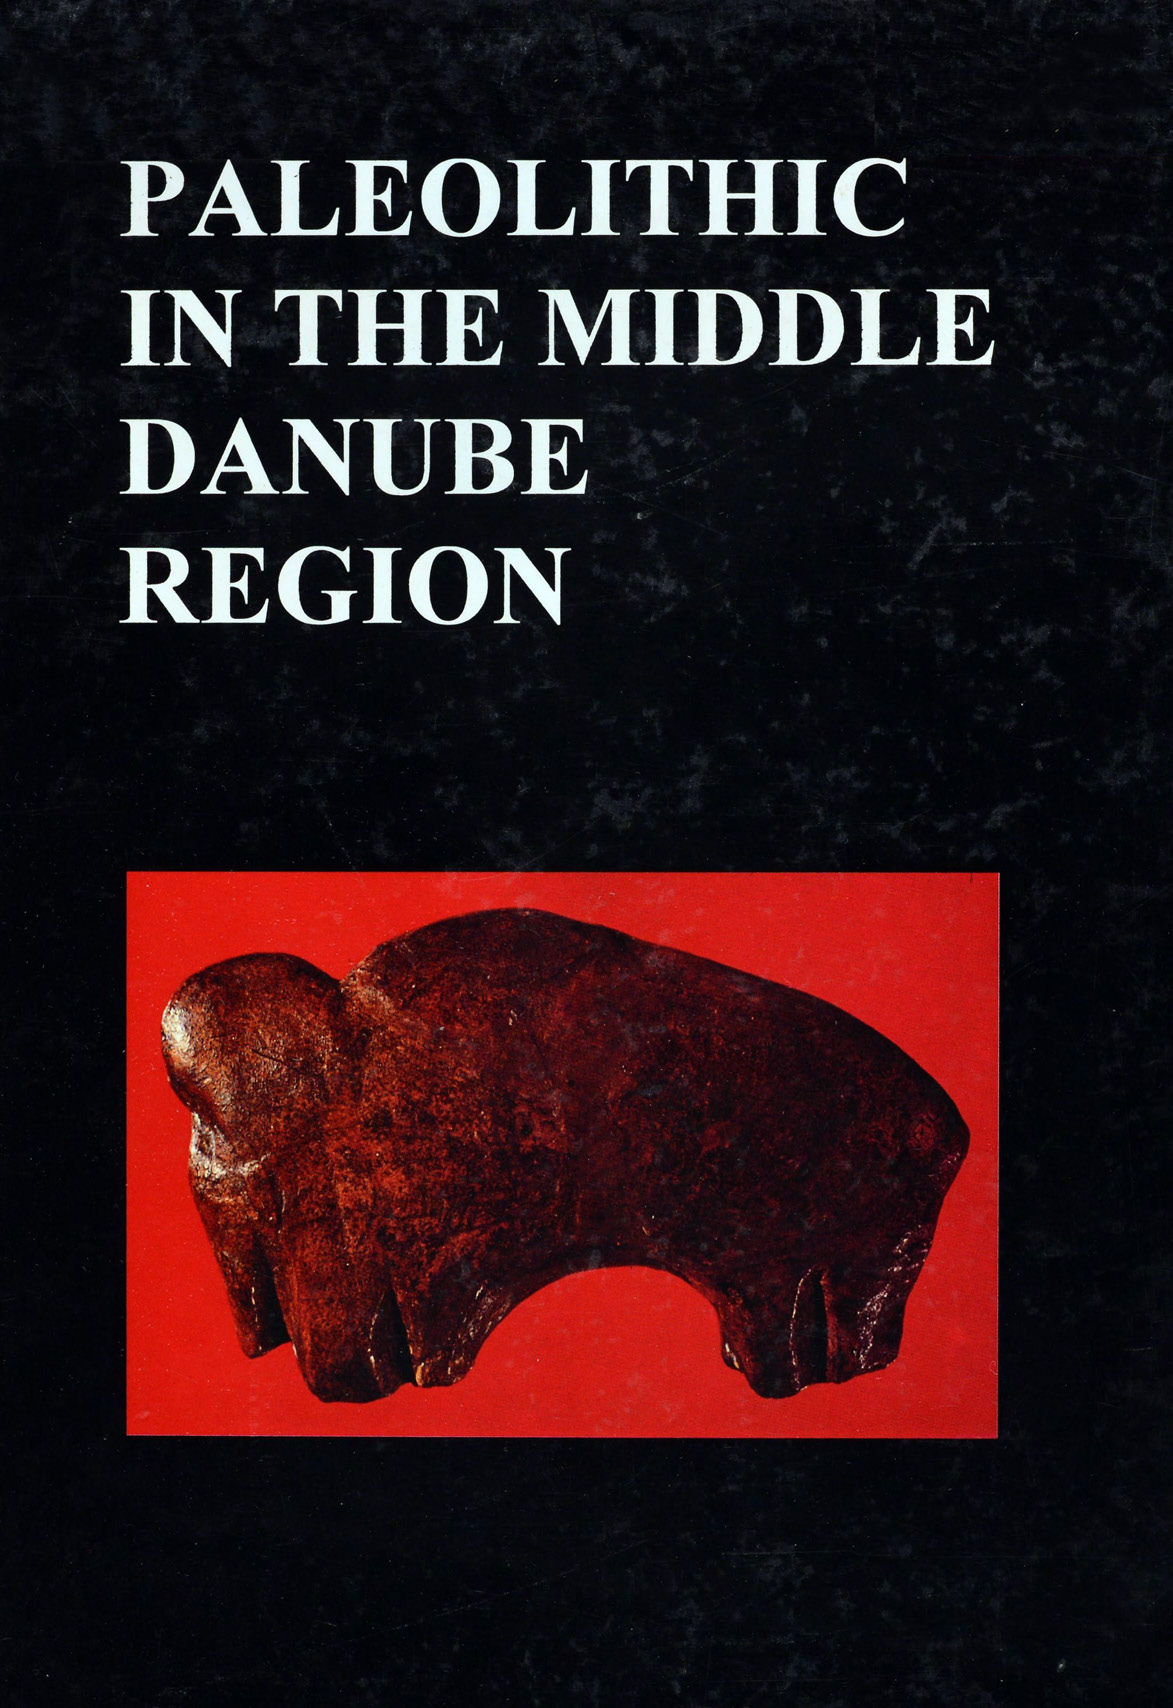 Paleolithic in the Middle Danube Region